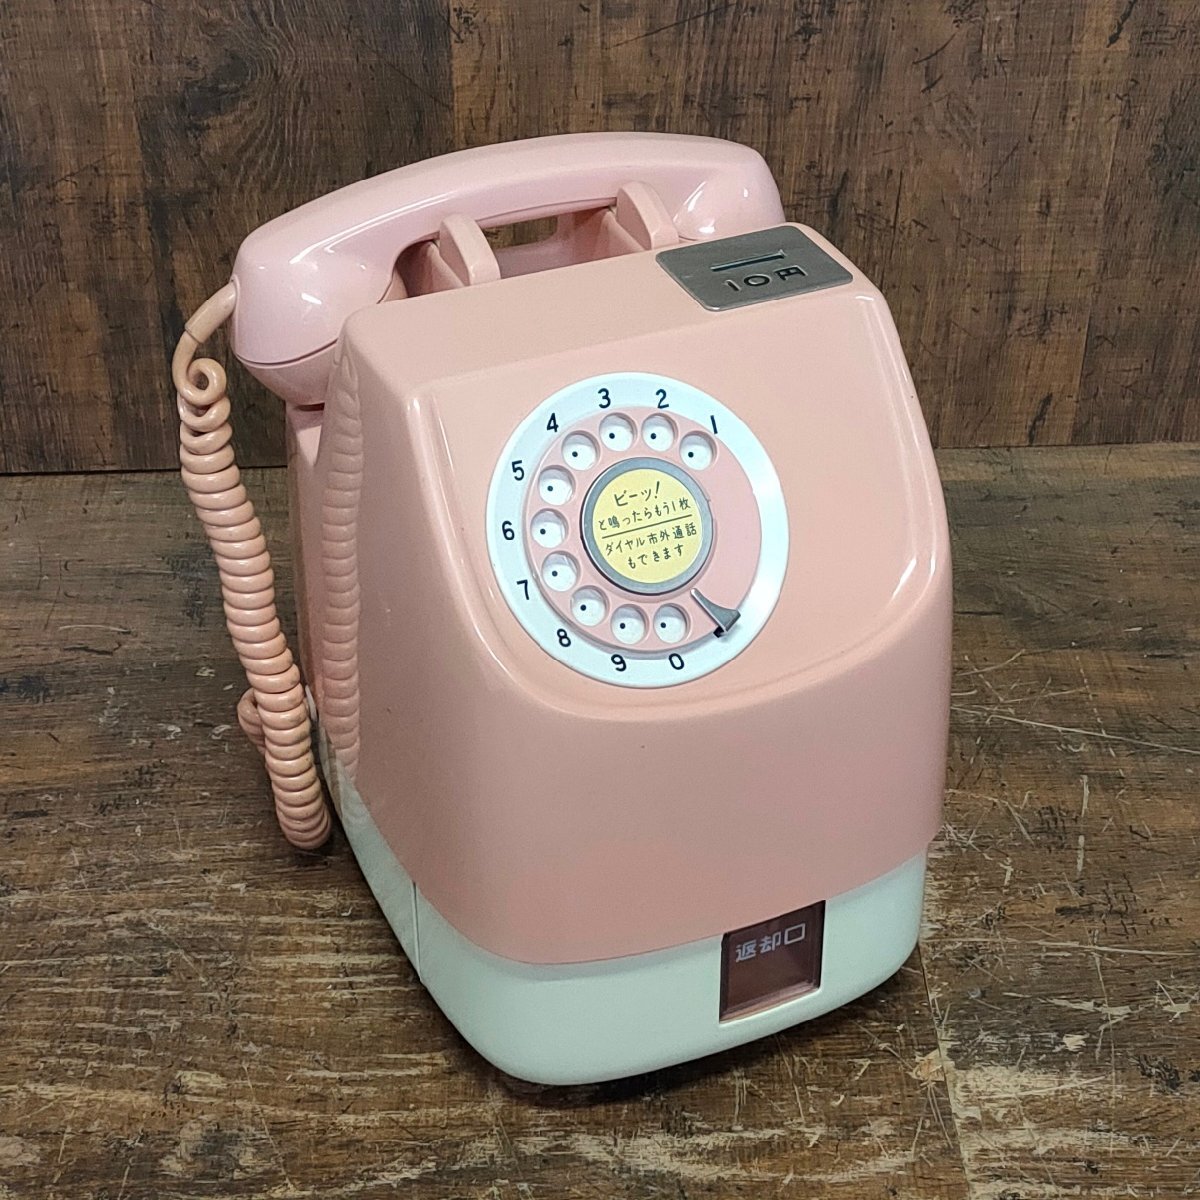  East Japan electro- confidence telephone corporation 675-A2 pink telephone public telephone dial type Showa Retro 0401804/SR28M